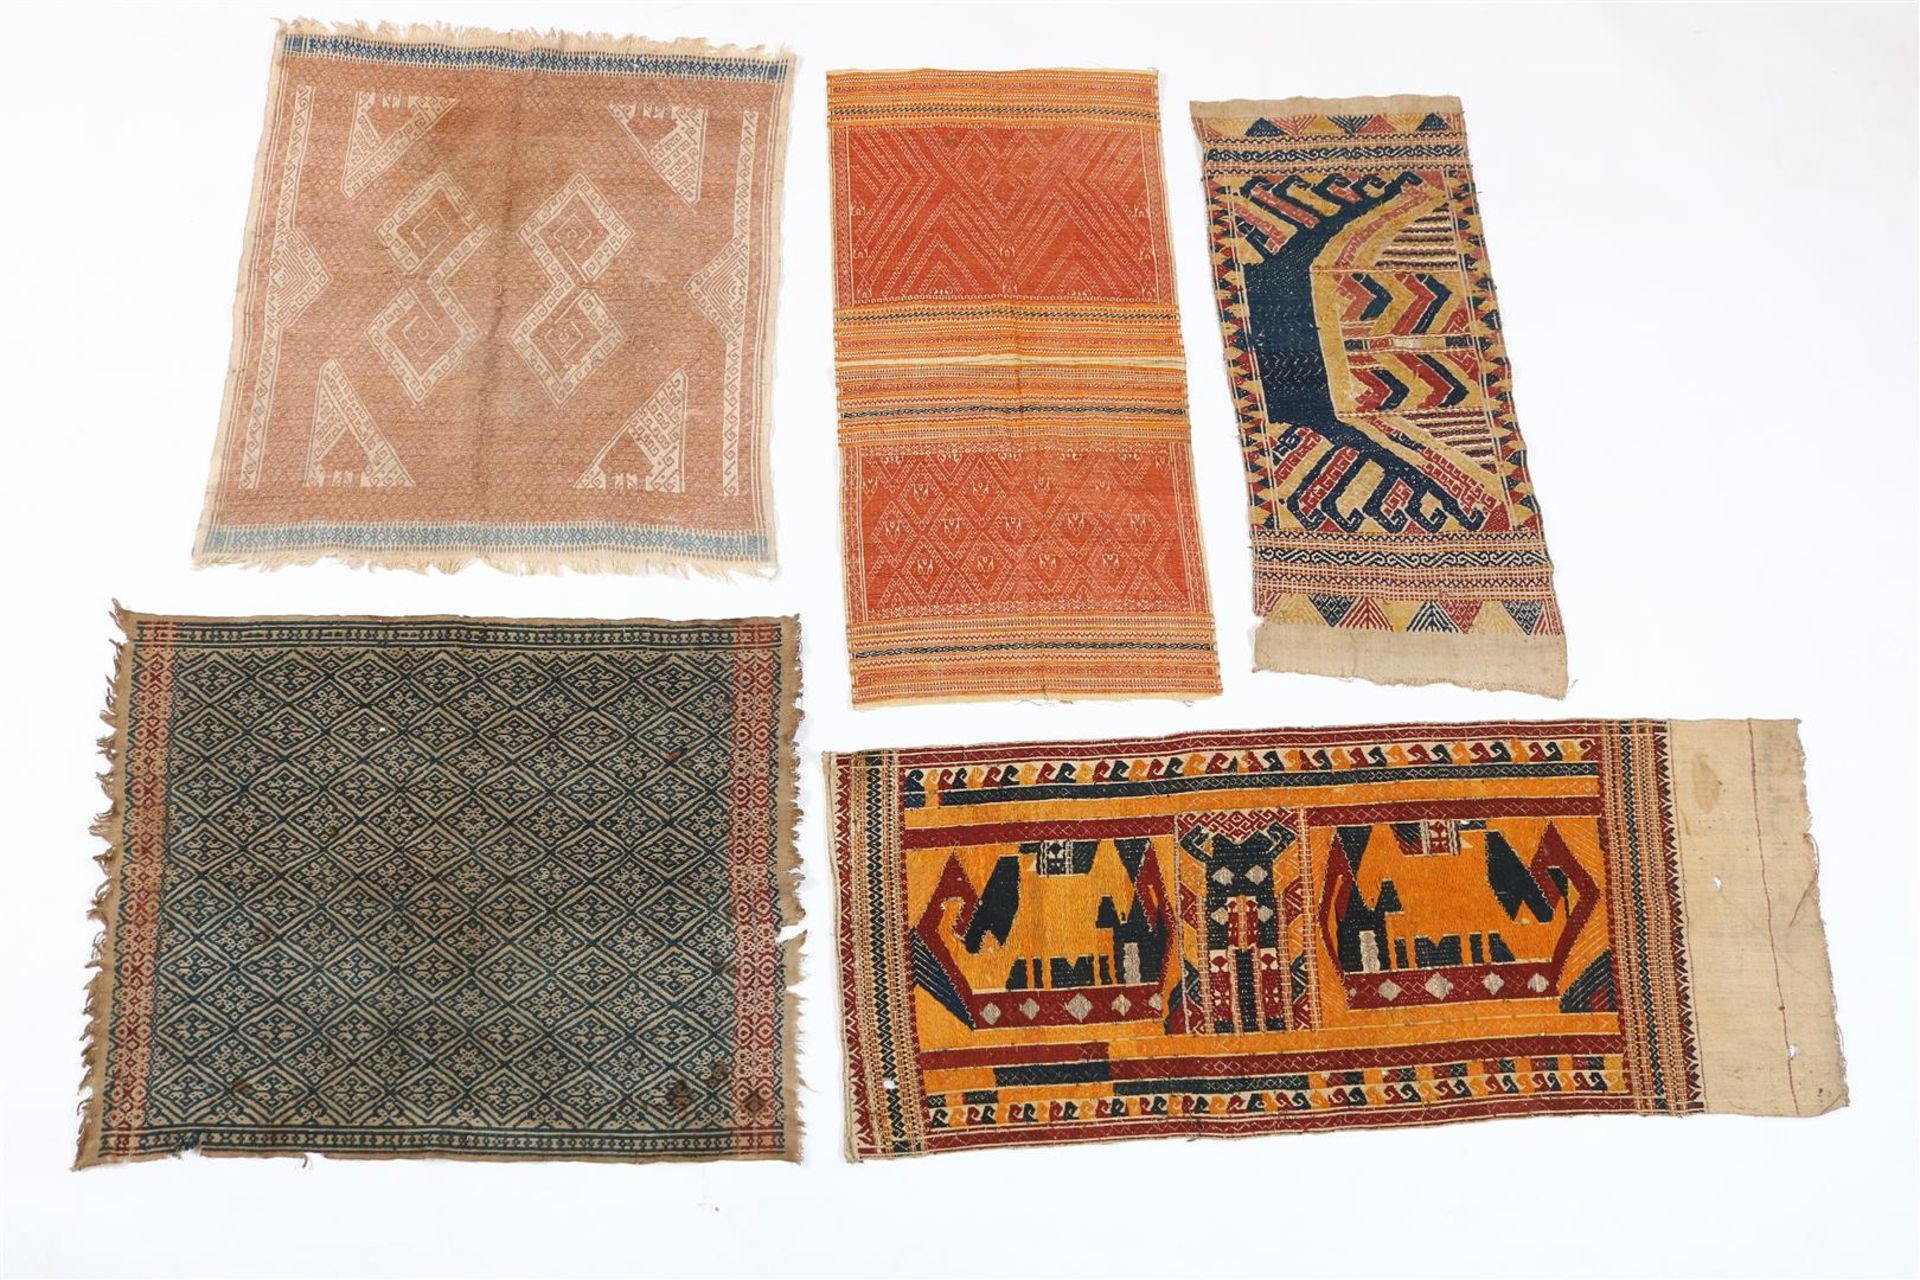 Two various elongated ceremonial cloths, Tatibin